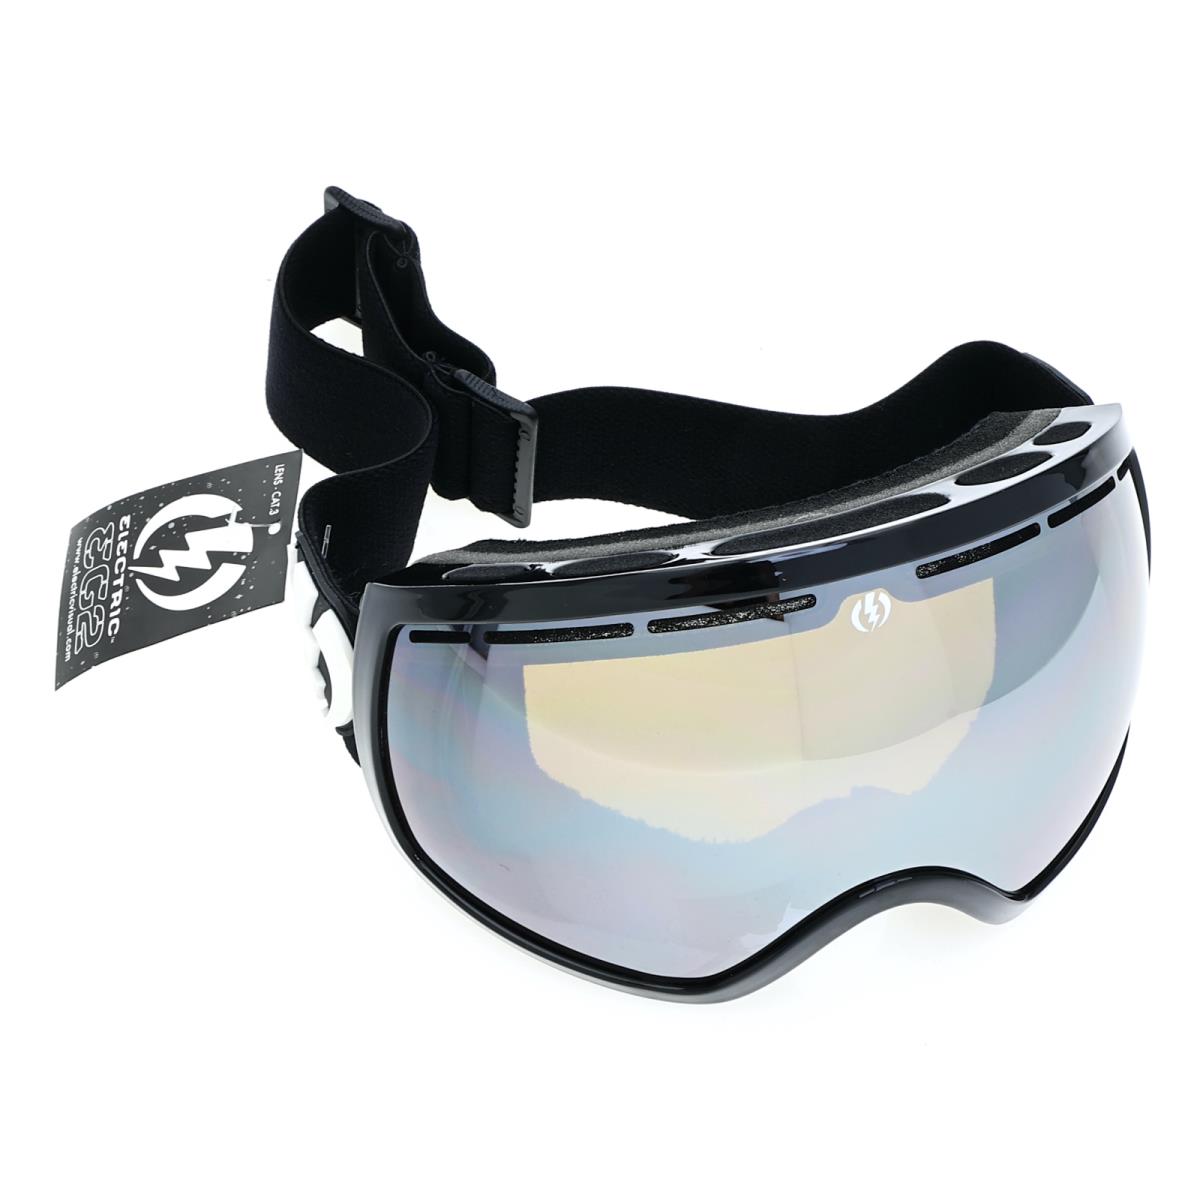 Electric EG2 Ski Snowboard Goggles in Glossy Black / Chrome Bronze Lens S4002